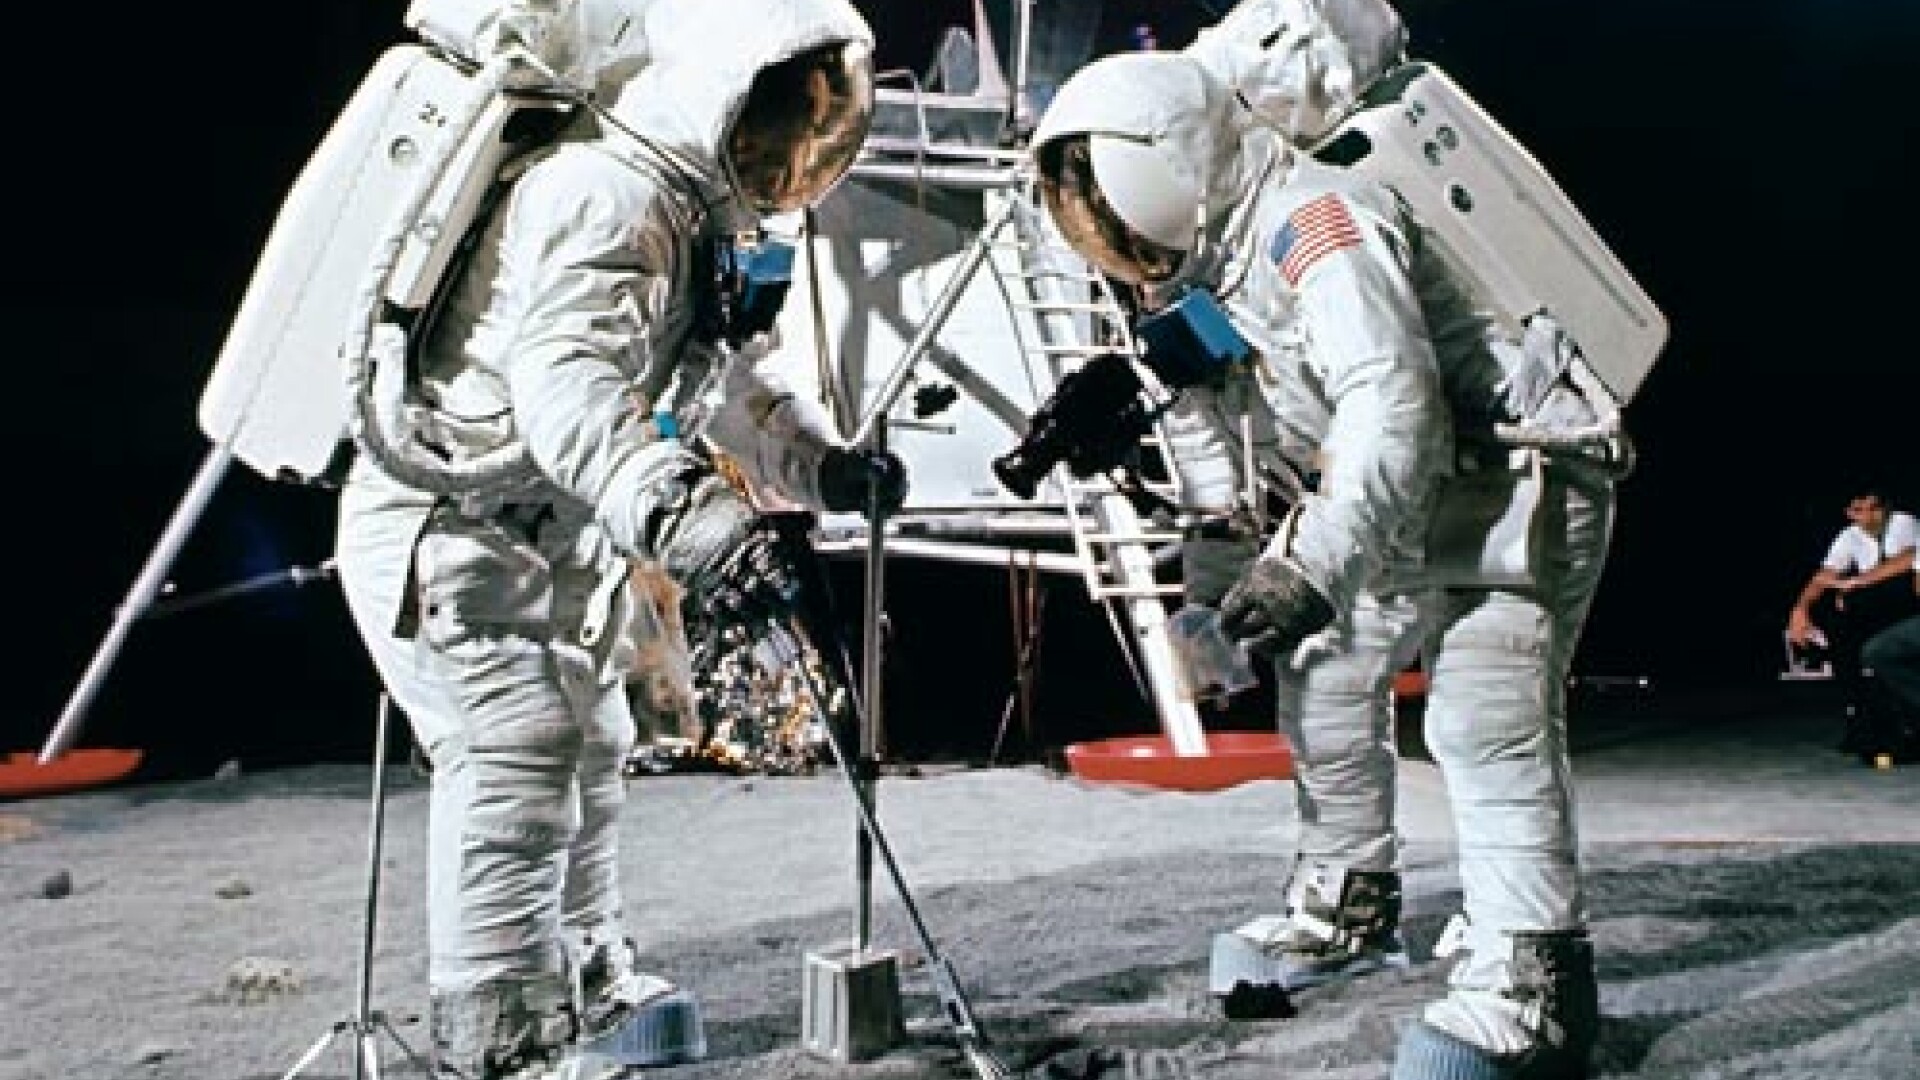 Imagini inedite ale NASA cu echipajul Apollo 11!